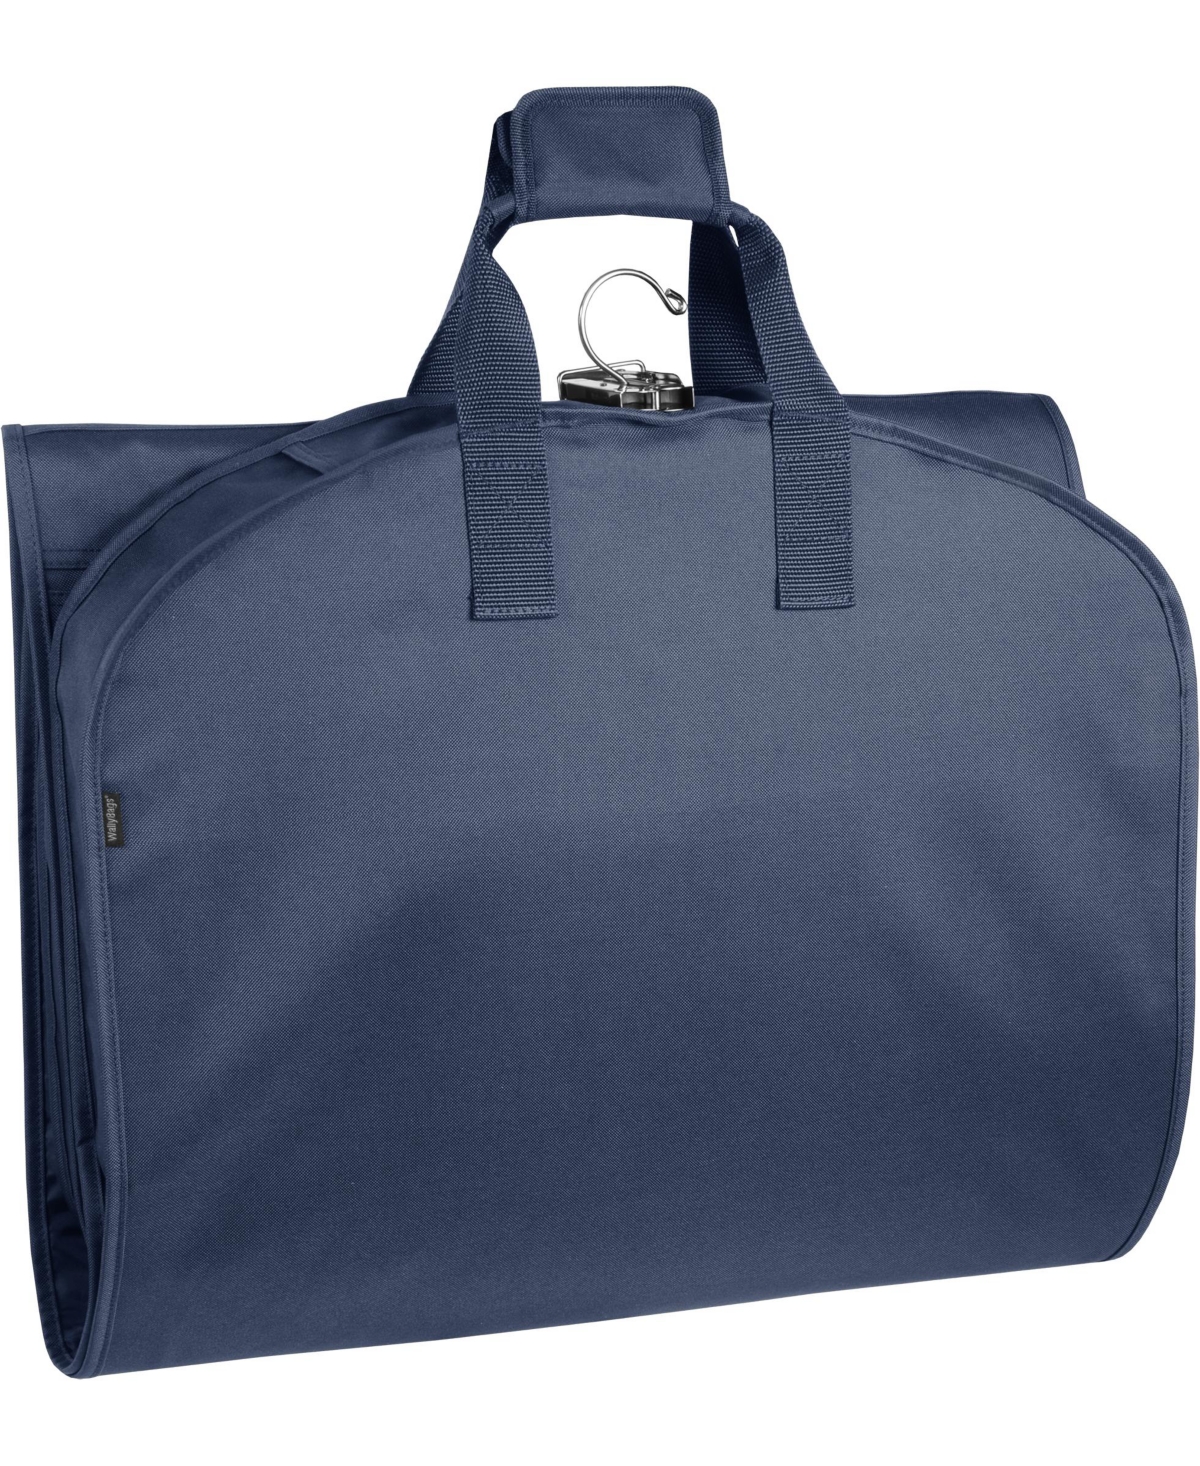 60" Premium Tri-Fold Travel Garment Bag with Pocket - Black